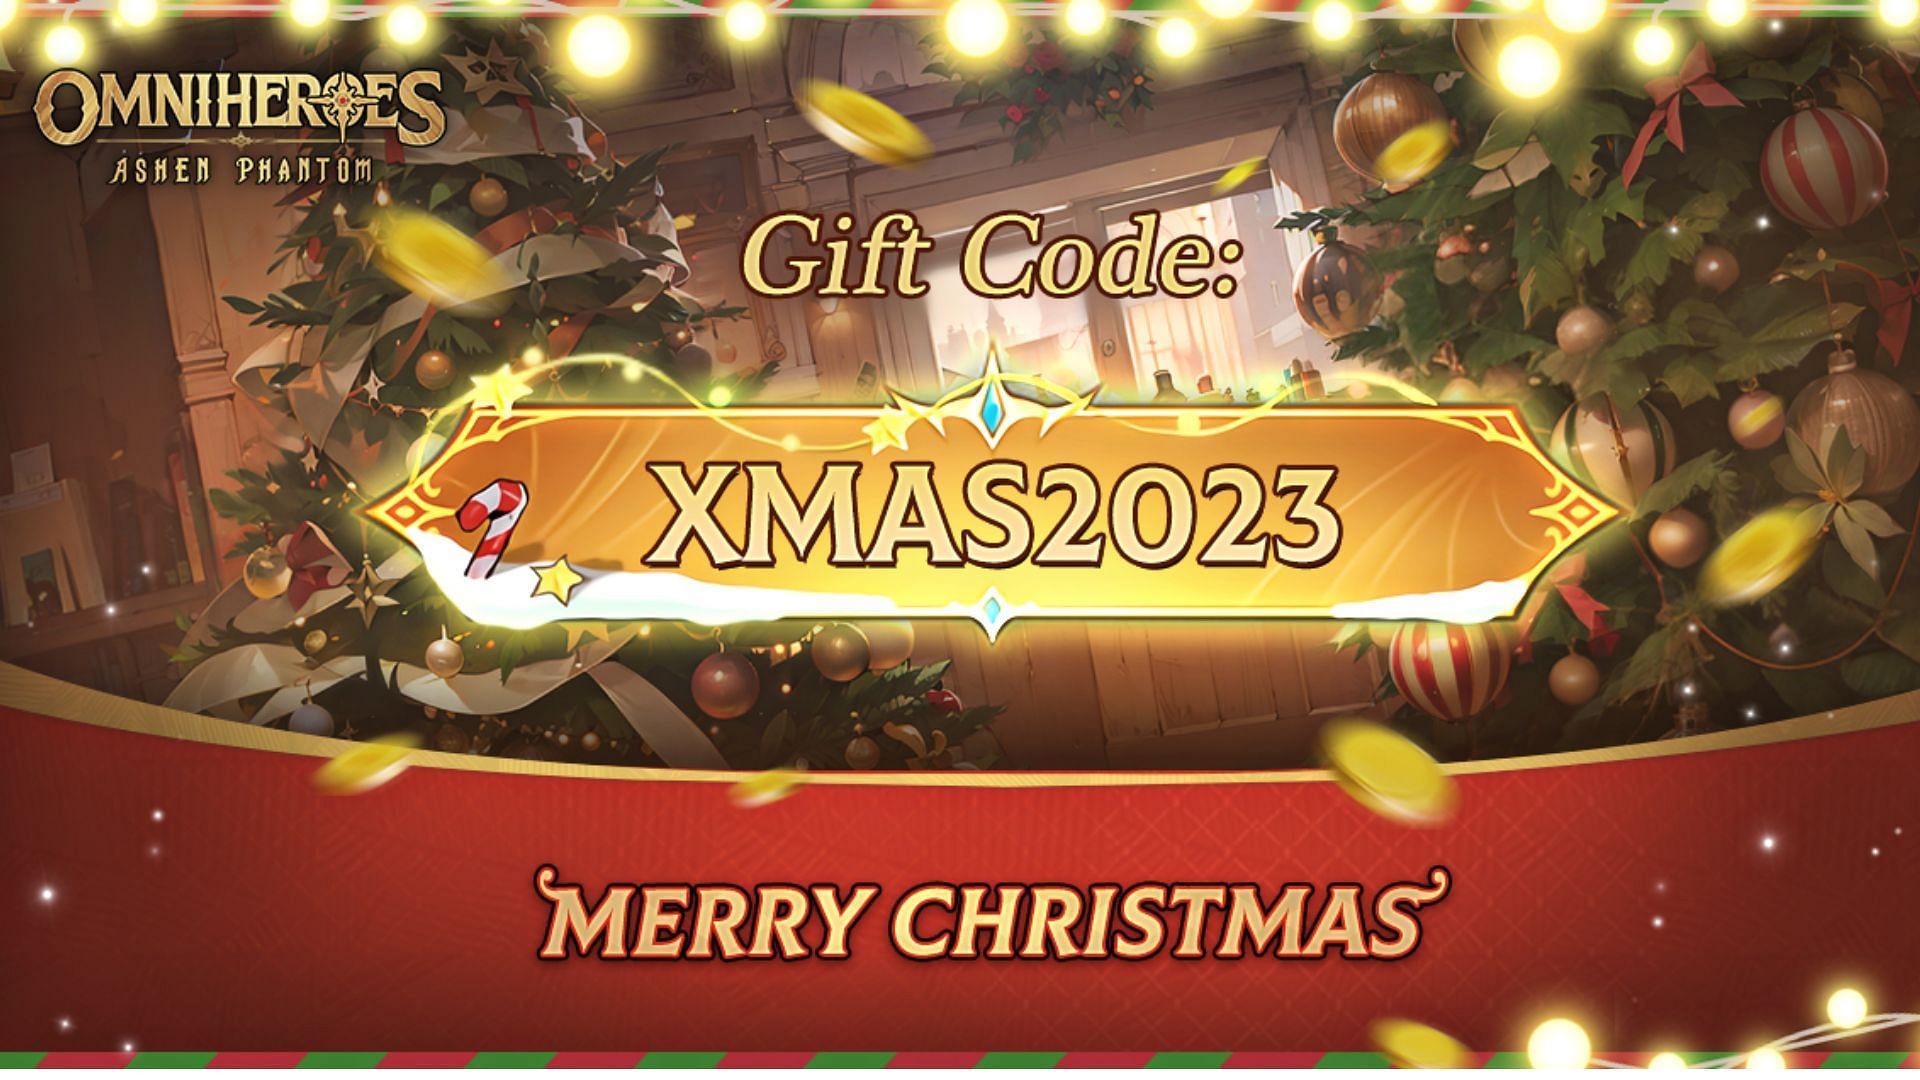 Omniheroes gift code for Christmas (Image via Omnidream) 